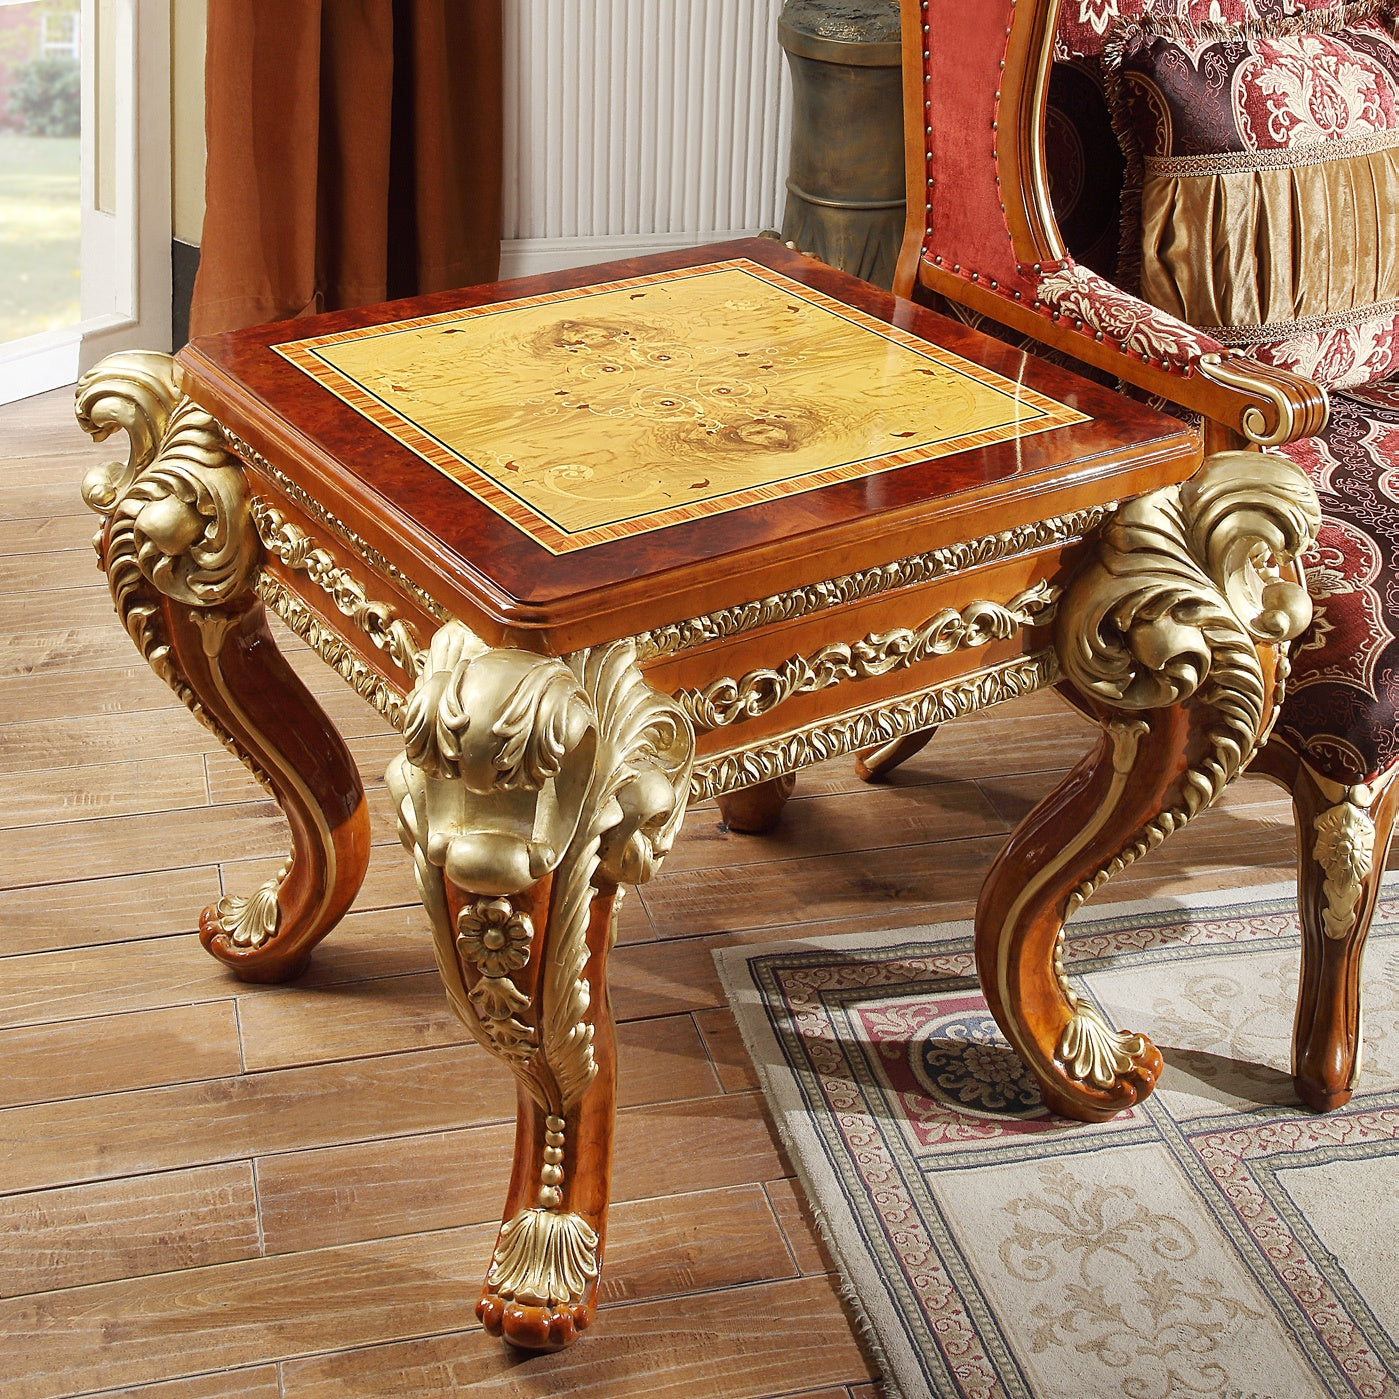 End Table in Metallic Golden Tan Finish E8024 European Traditional Victorian